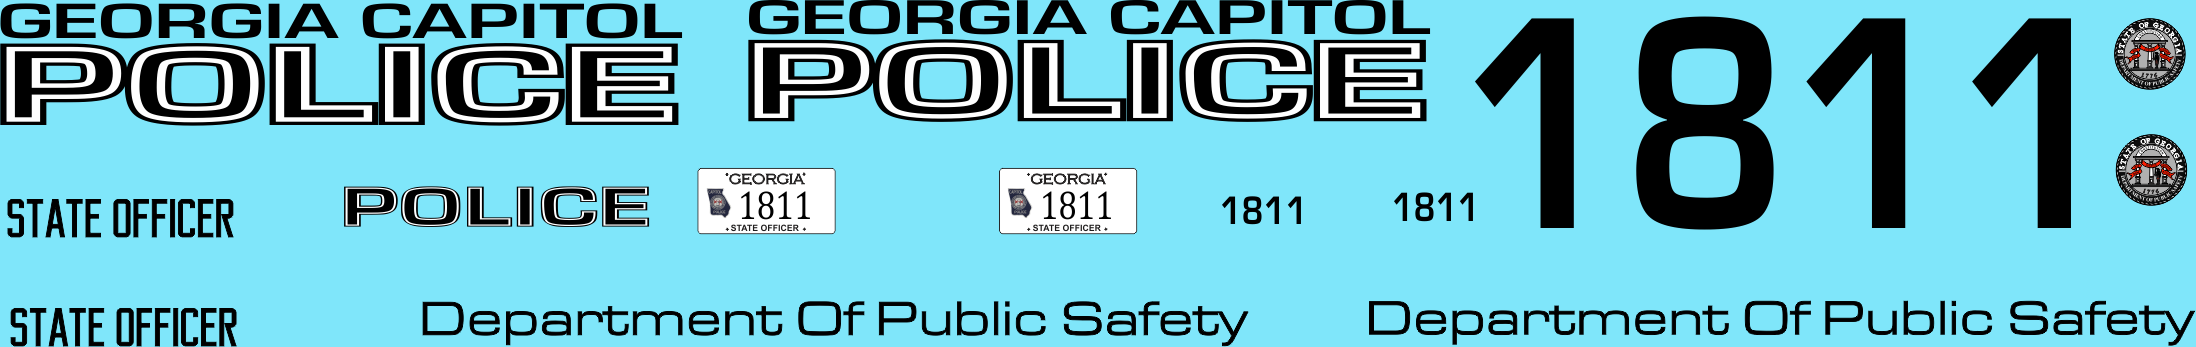 1/43 Georgia Capitol Police waterslide decals